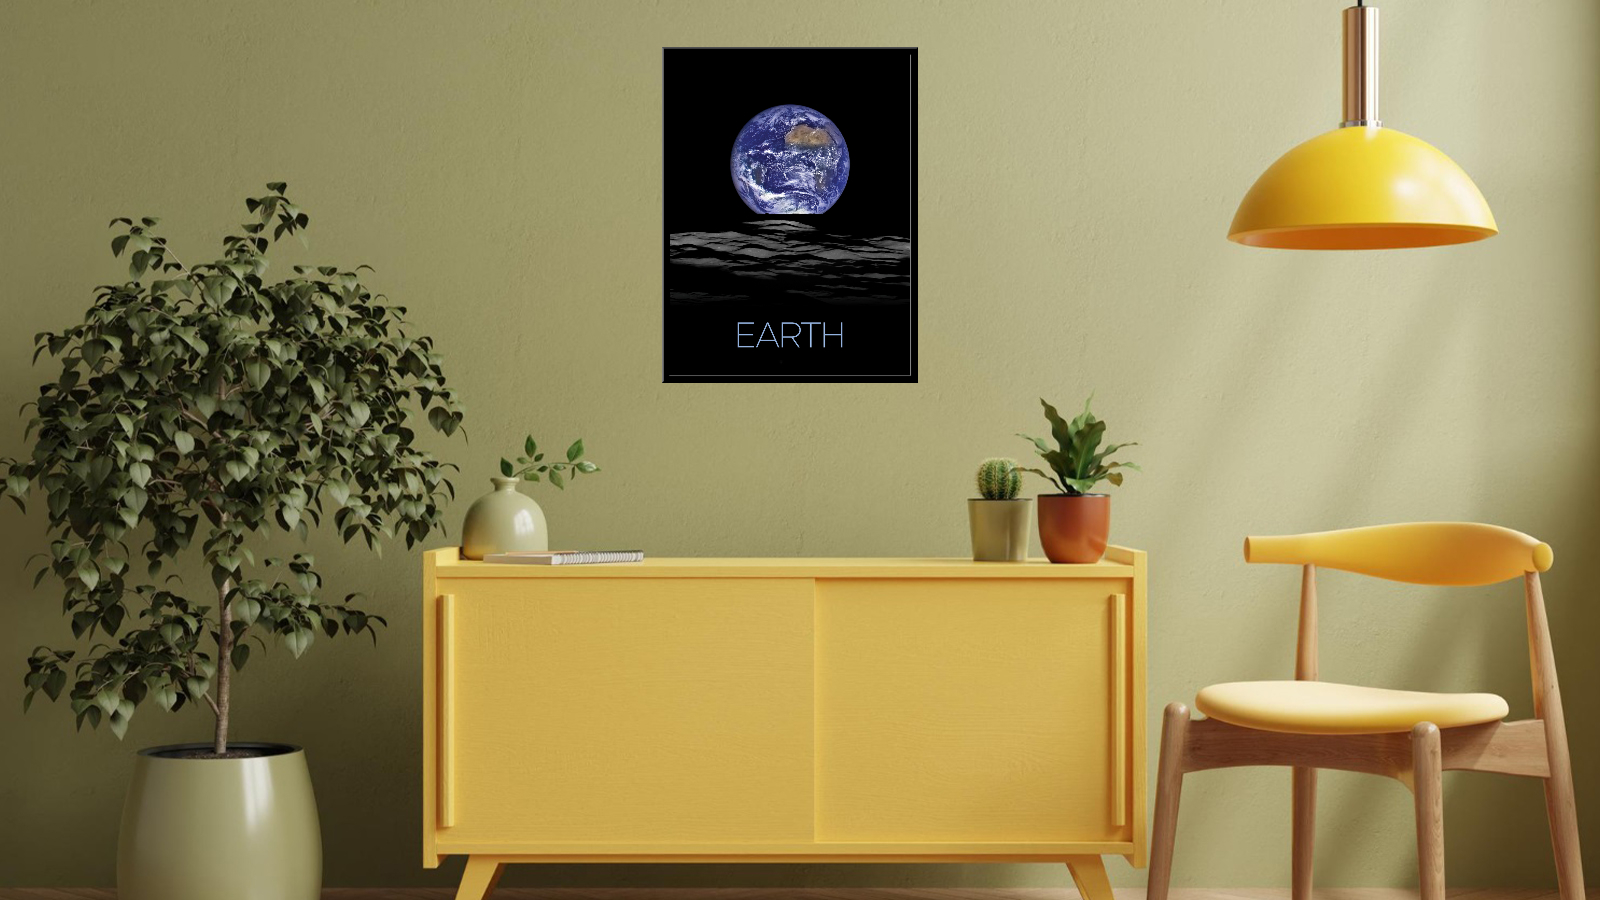 Earthrise over the moon